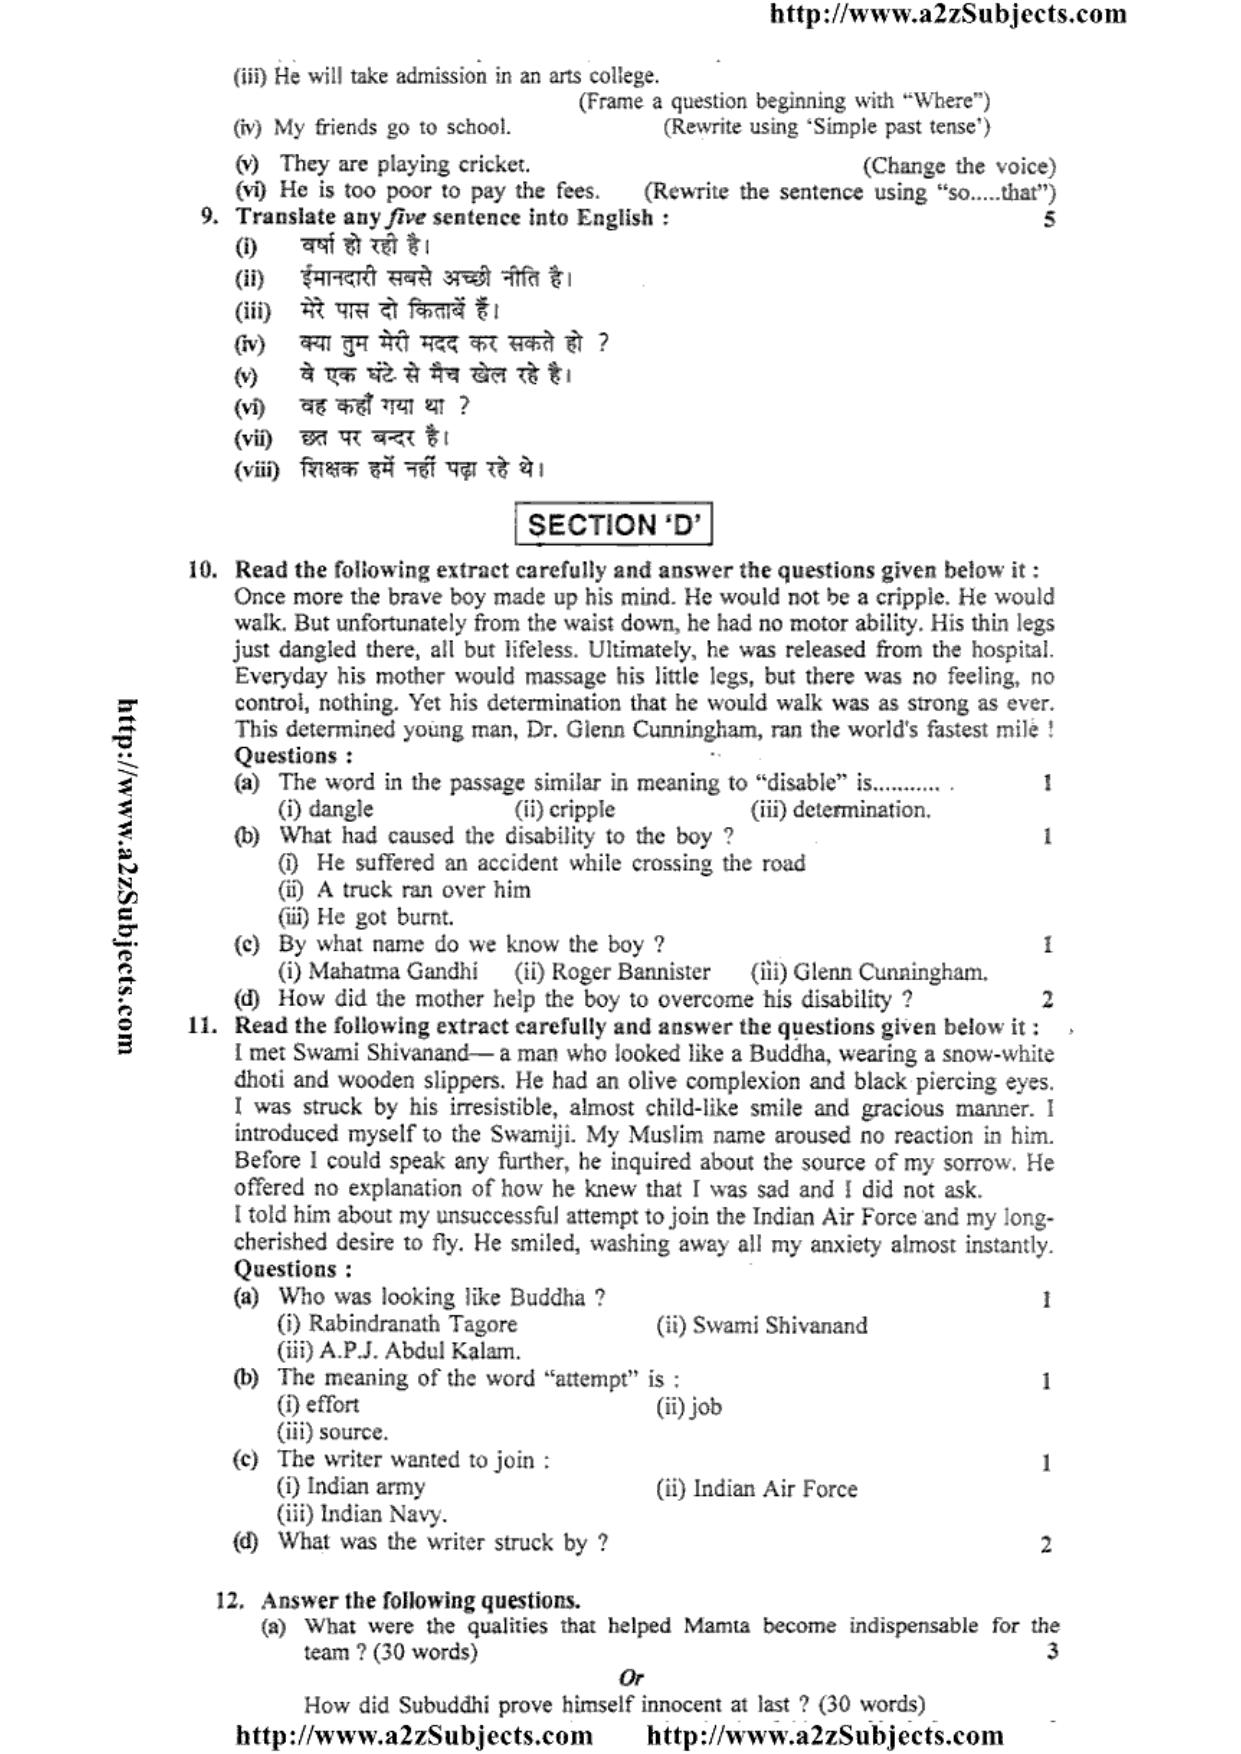 MP Board Class 10 English (Hindi Medium) 2016 Question Paper - Page 3